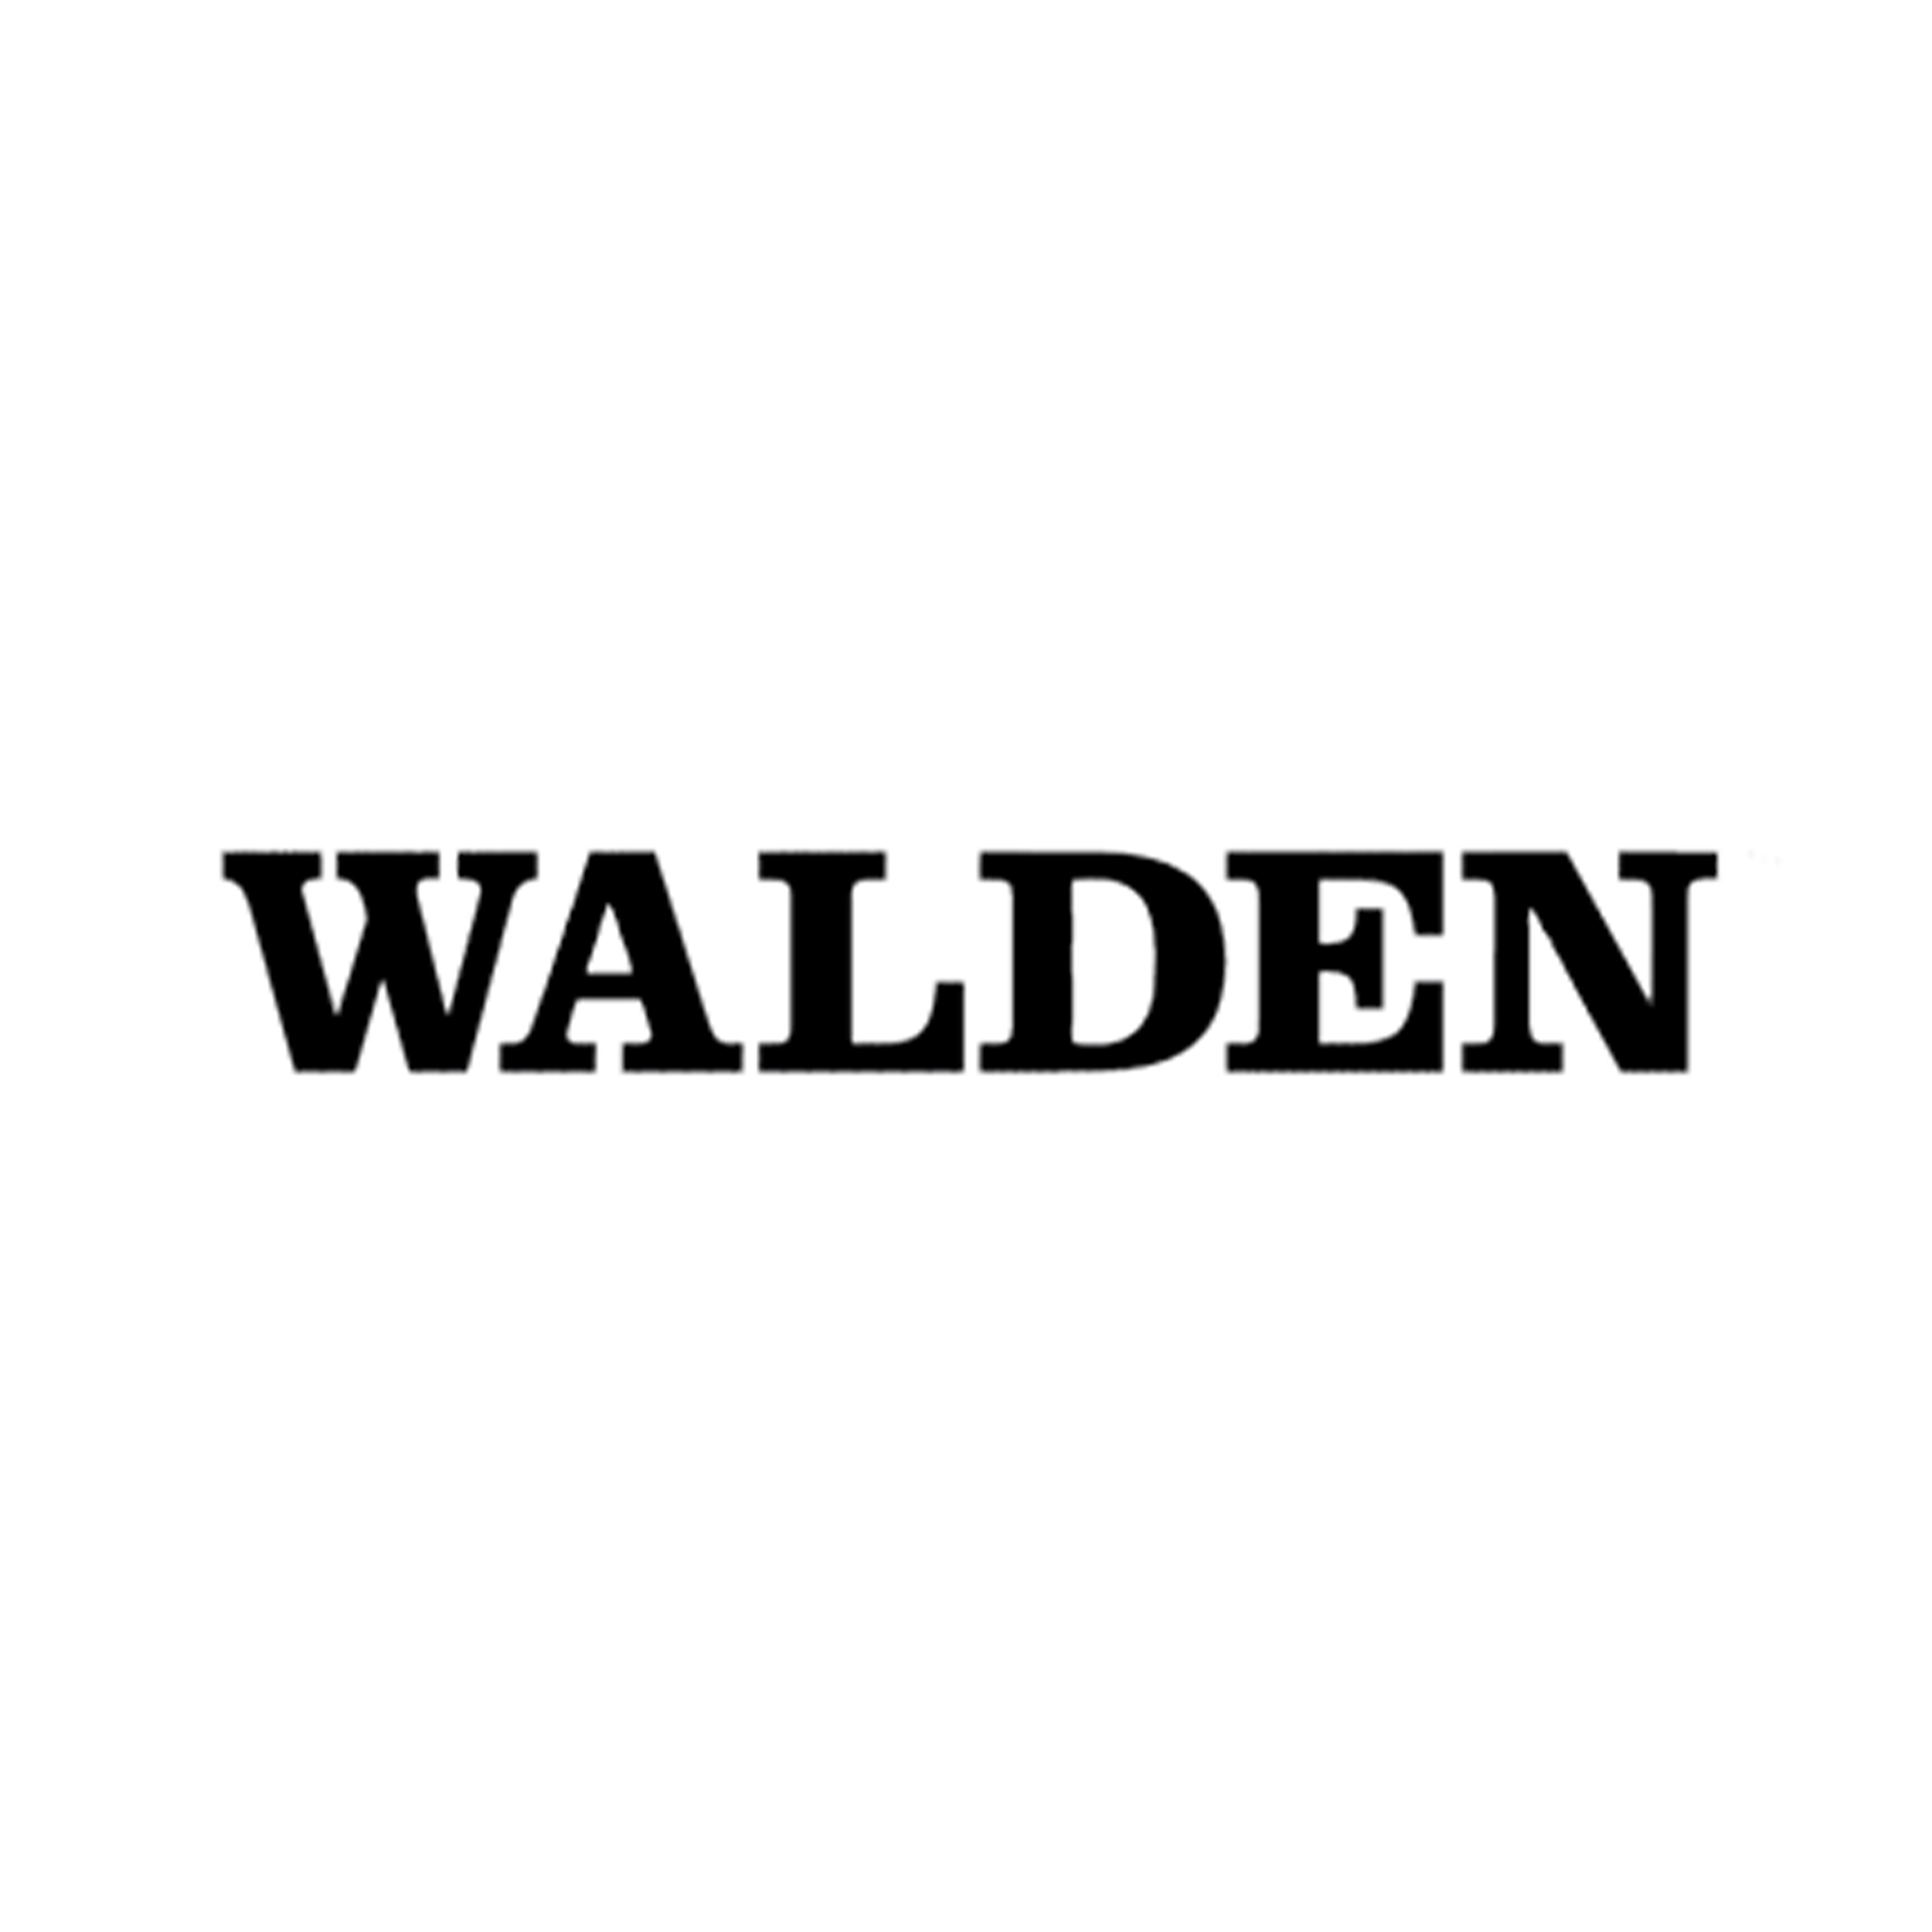 Walden logo